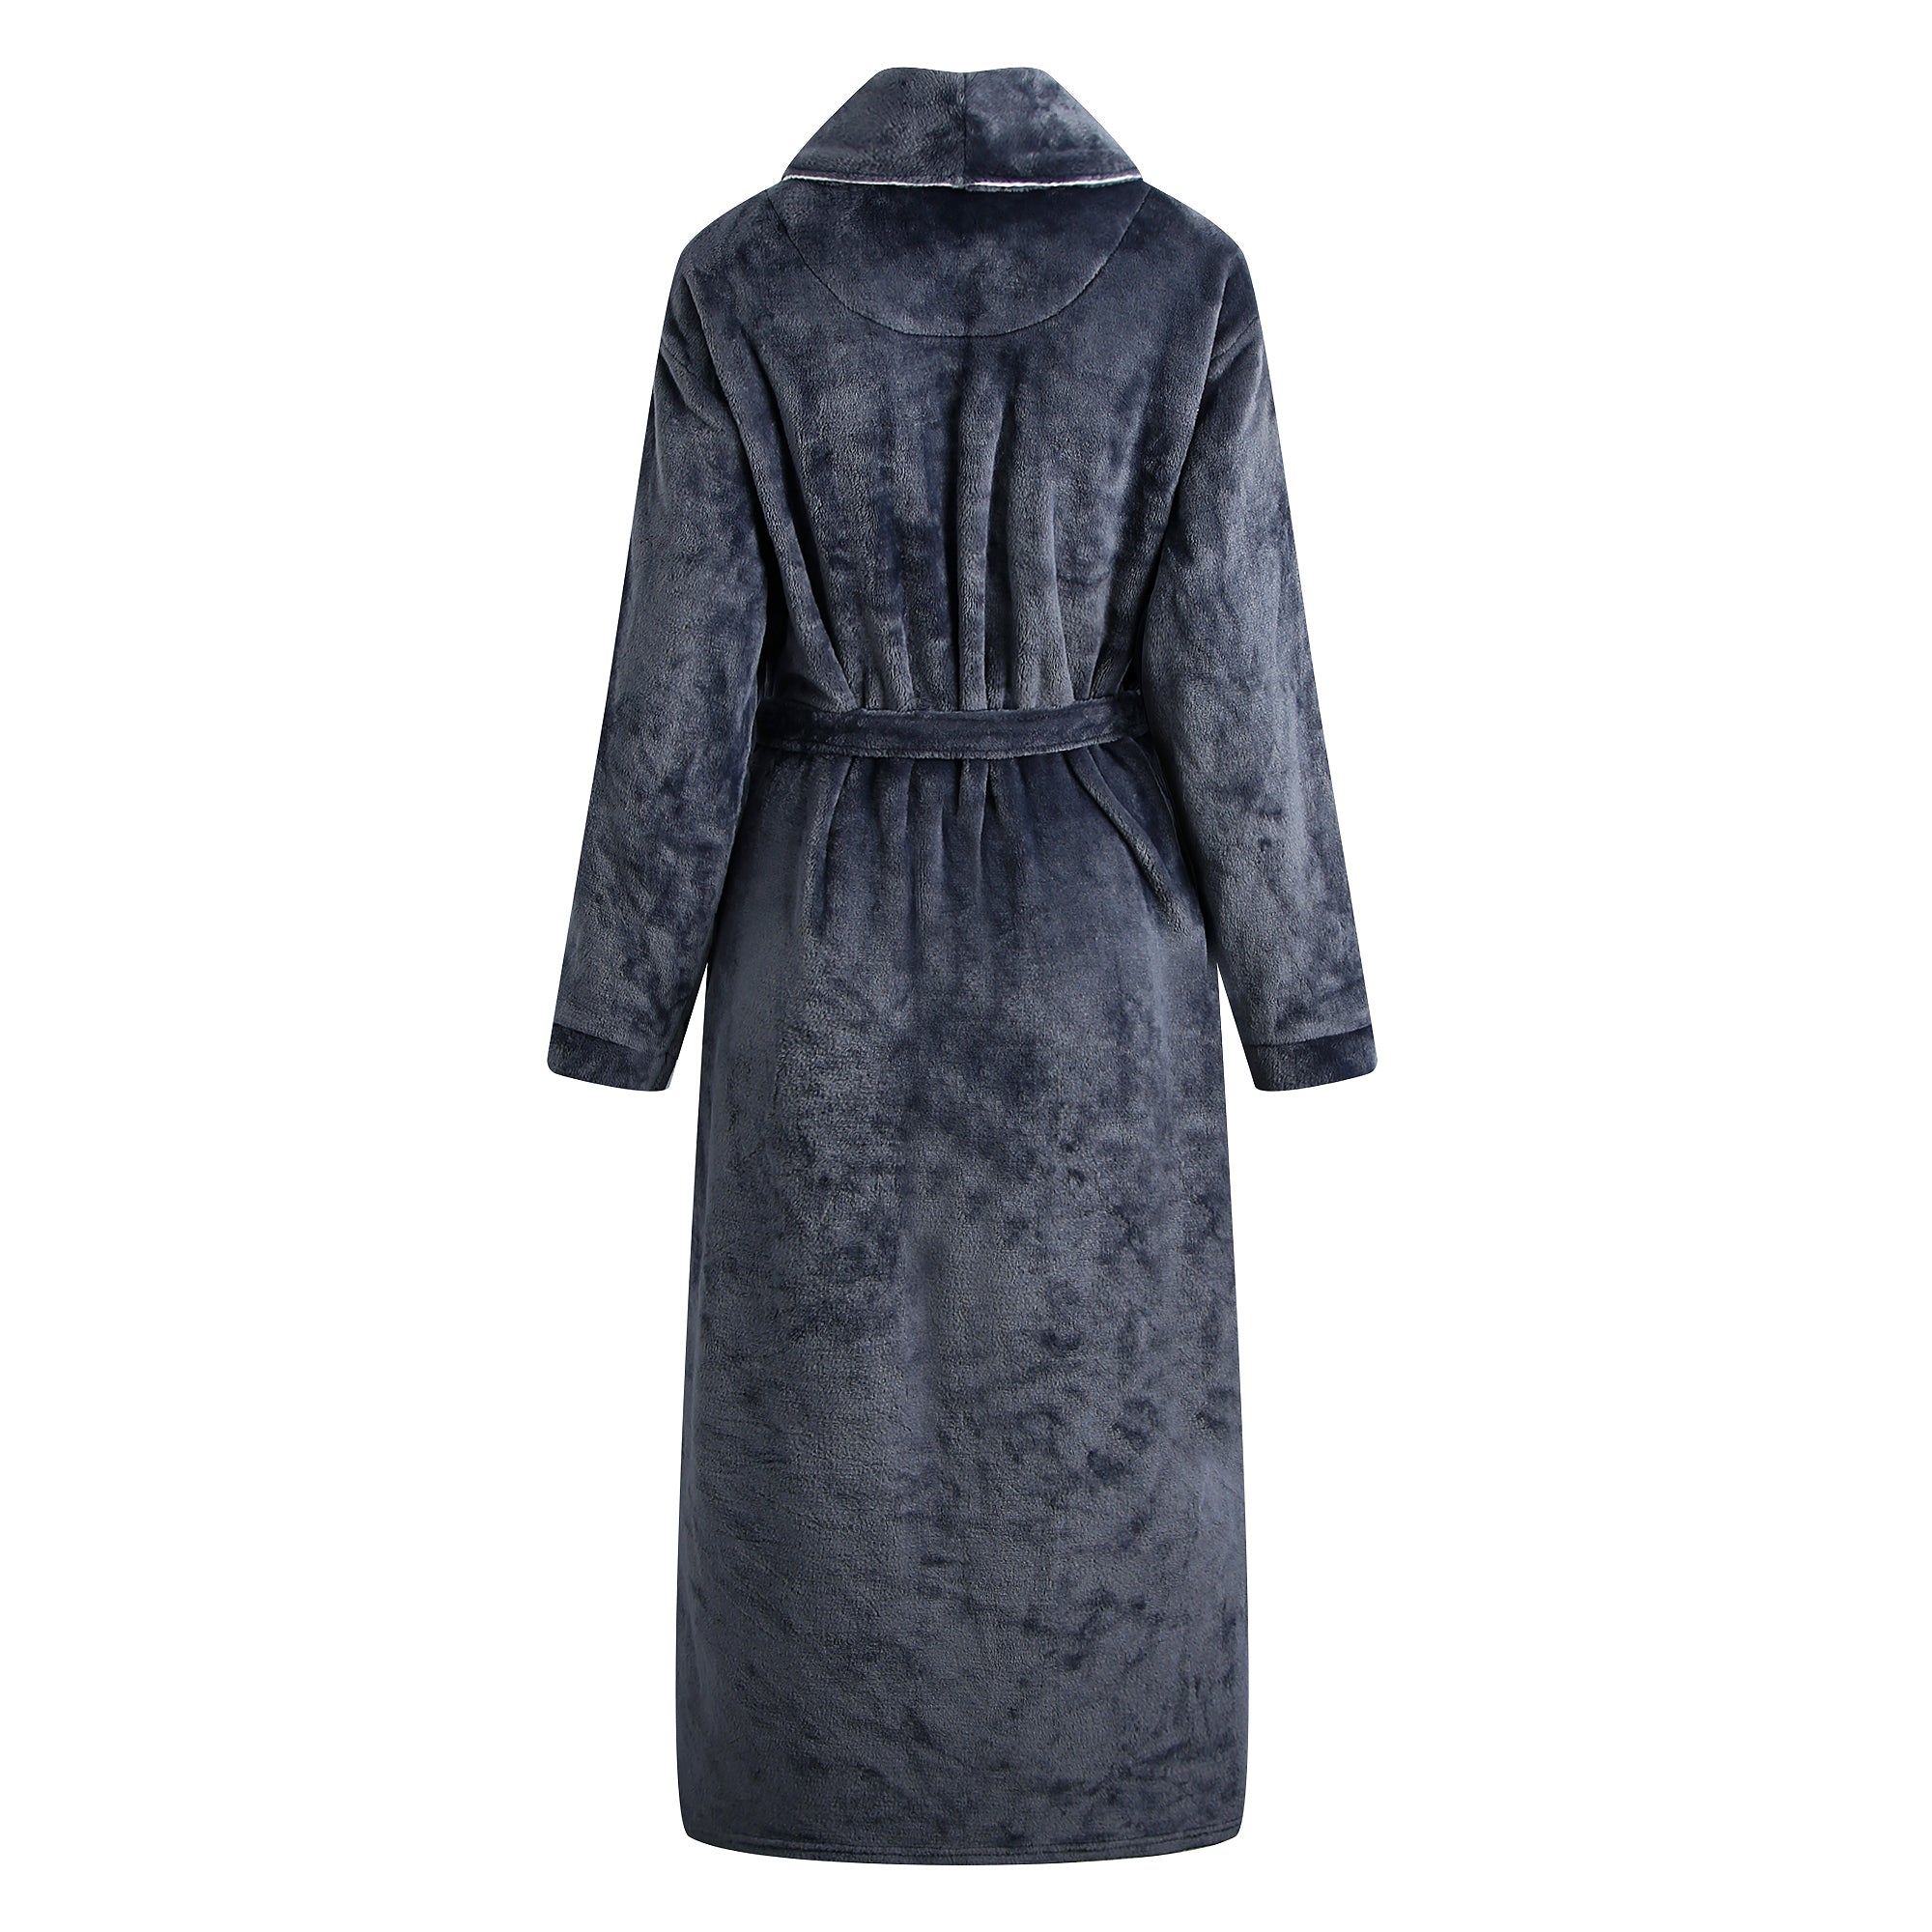 Artfasion Fluffy Plush Grey Dressing Gown Bathrobe with Hood and Wide